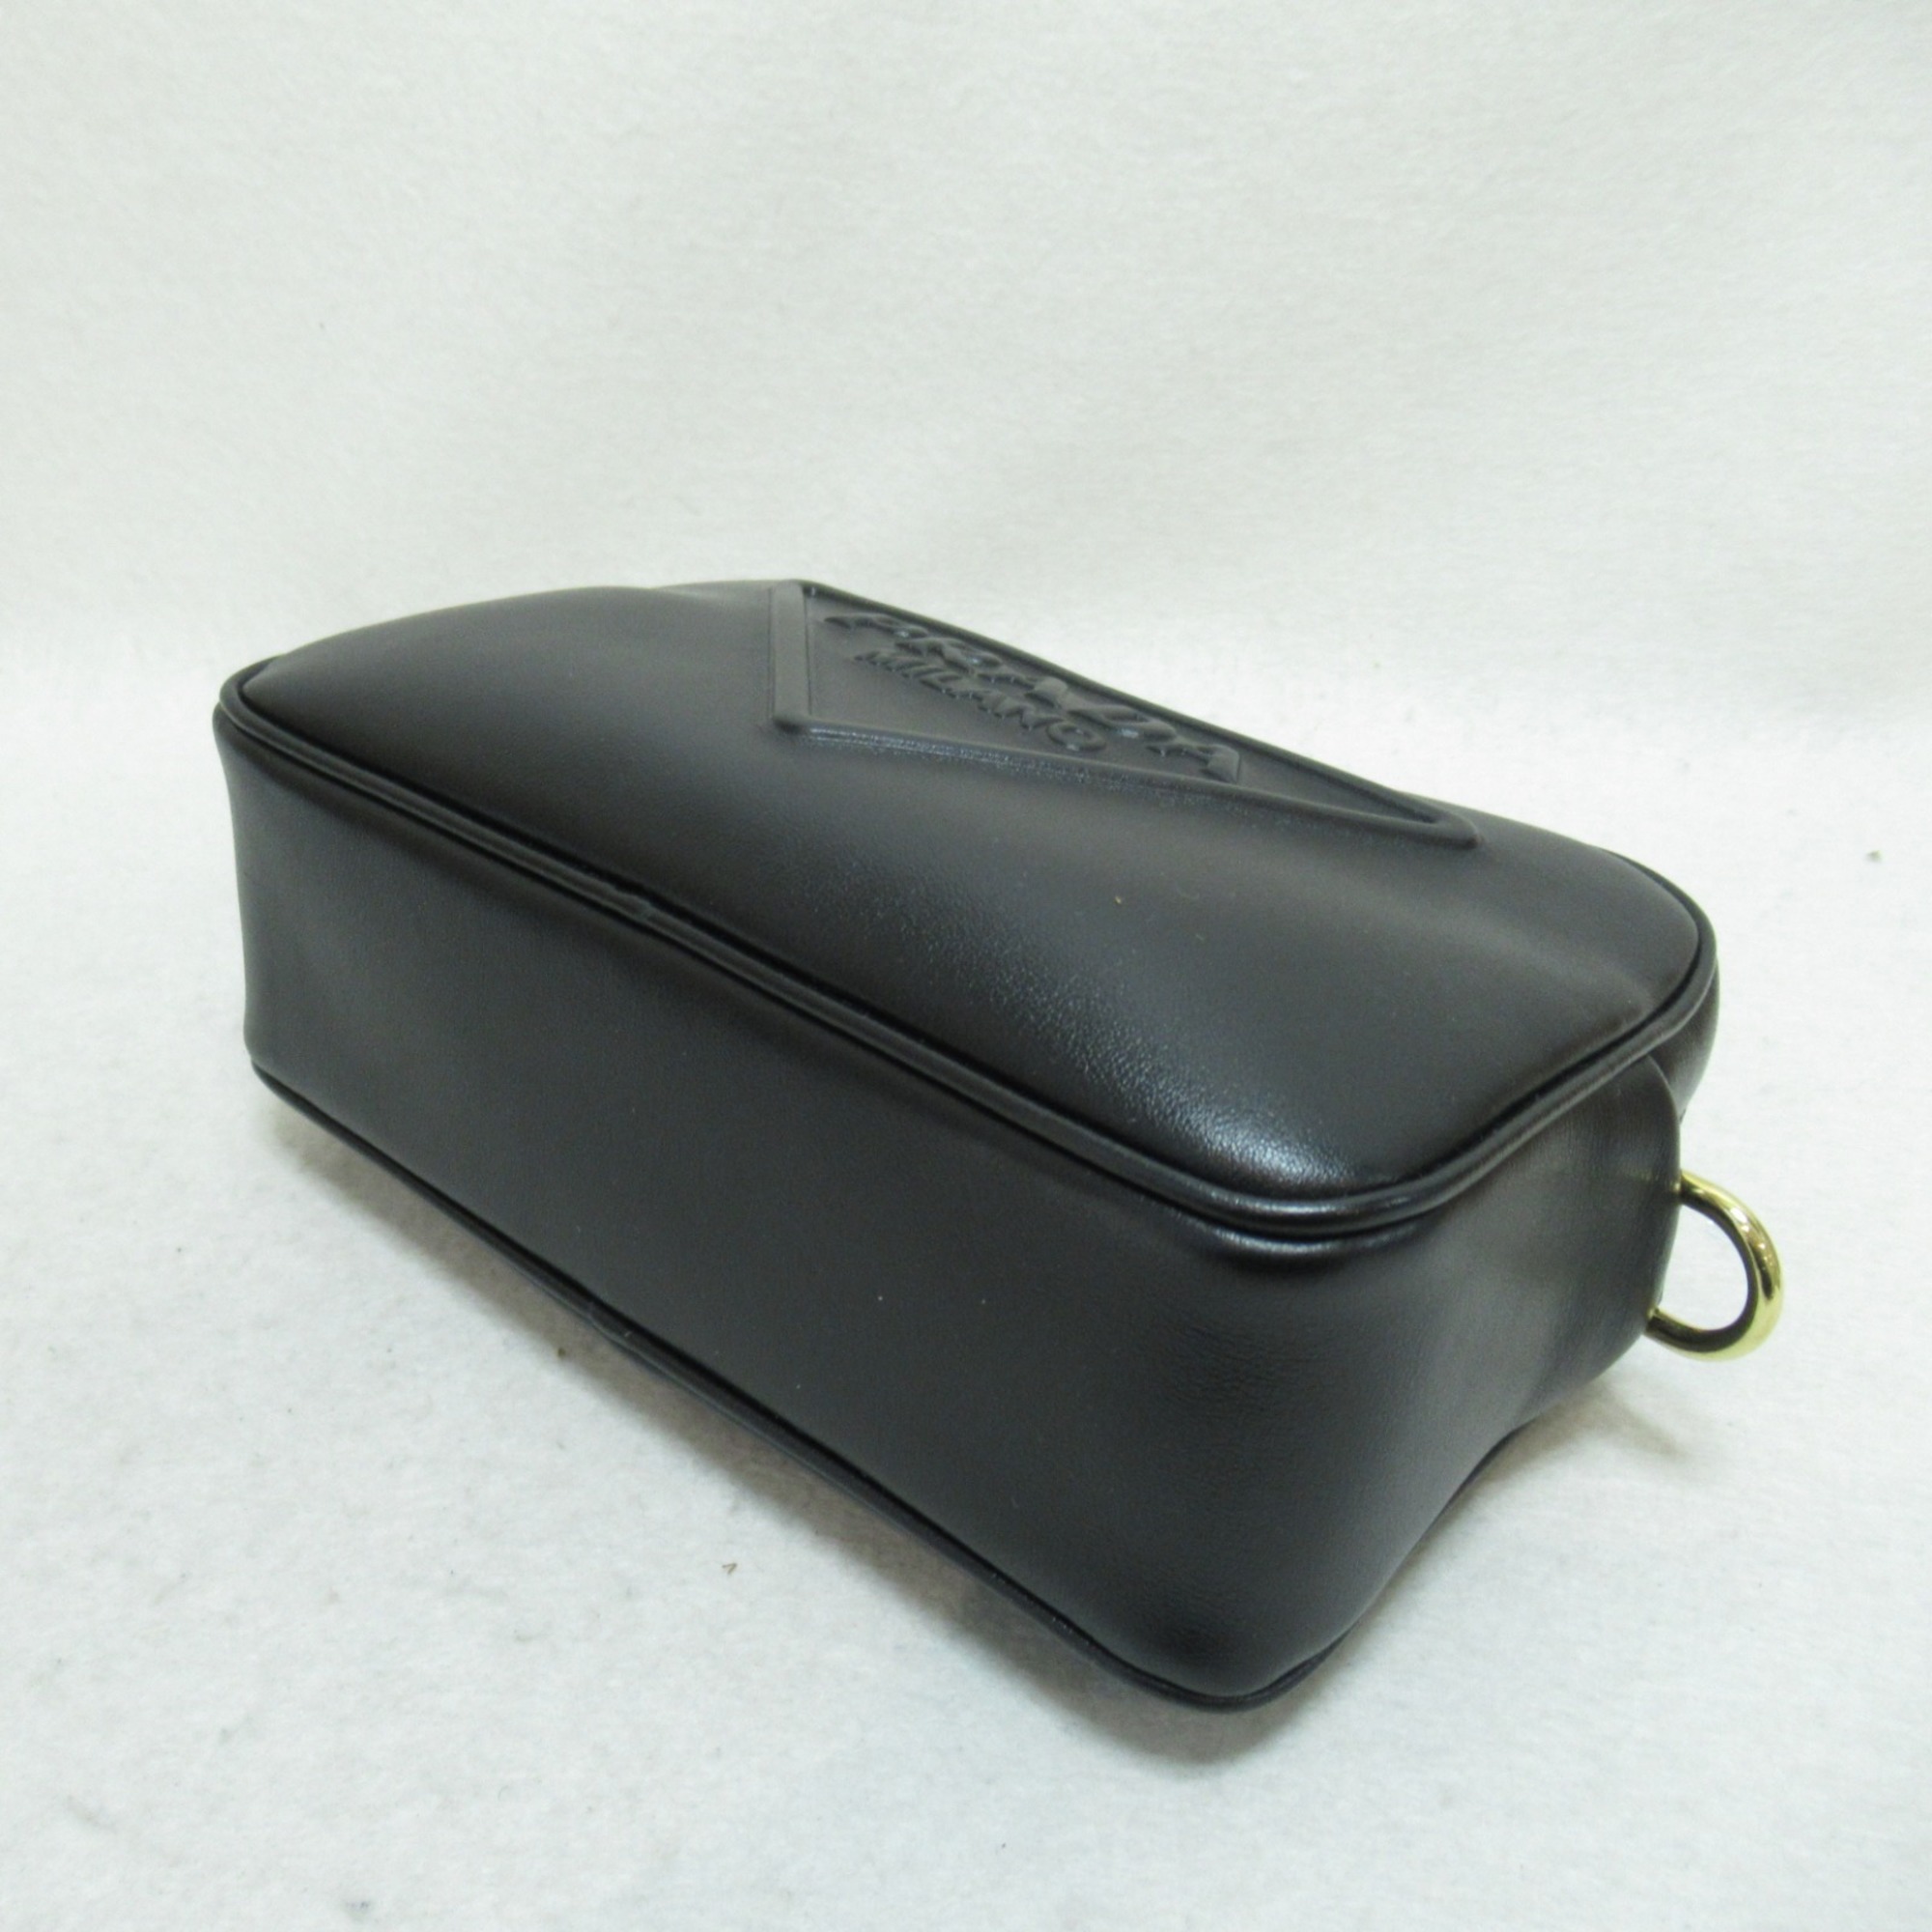 PRADA Shoulder Bag Black leather 1BH1952BYAF0632